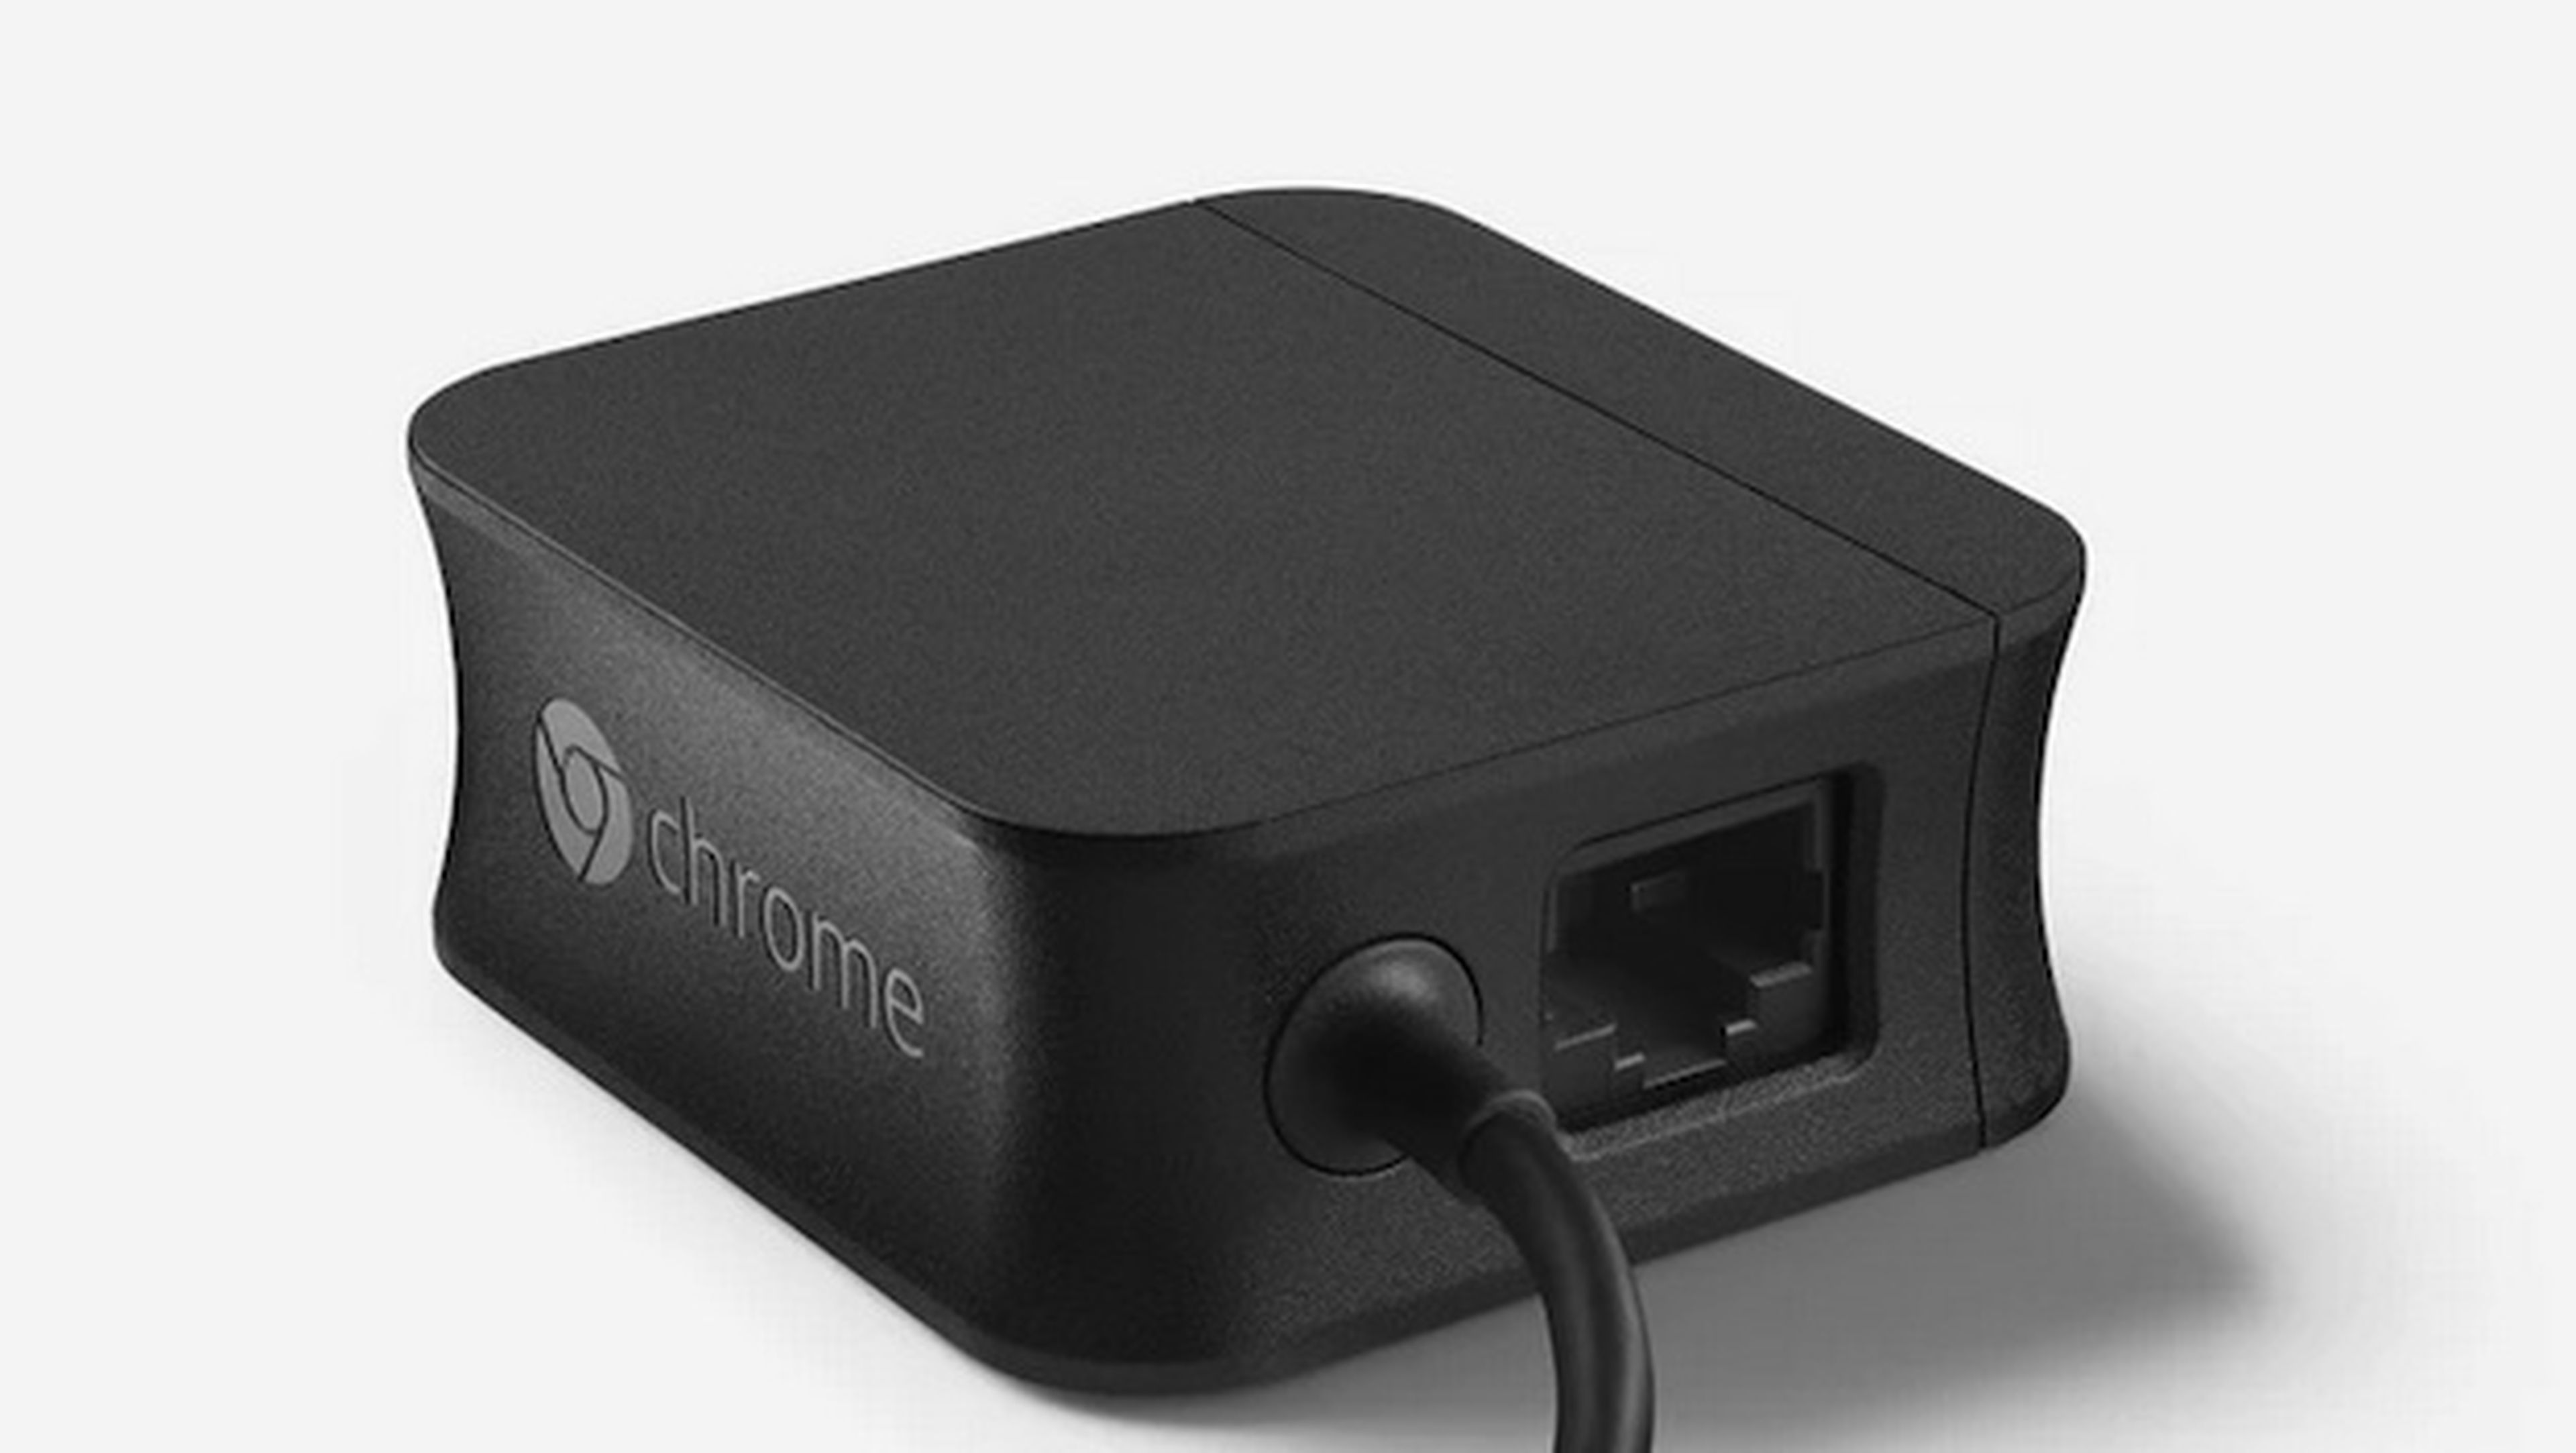 Ya puedes usar tu Chromecast con conexión Ethernet